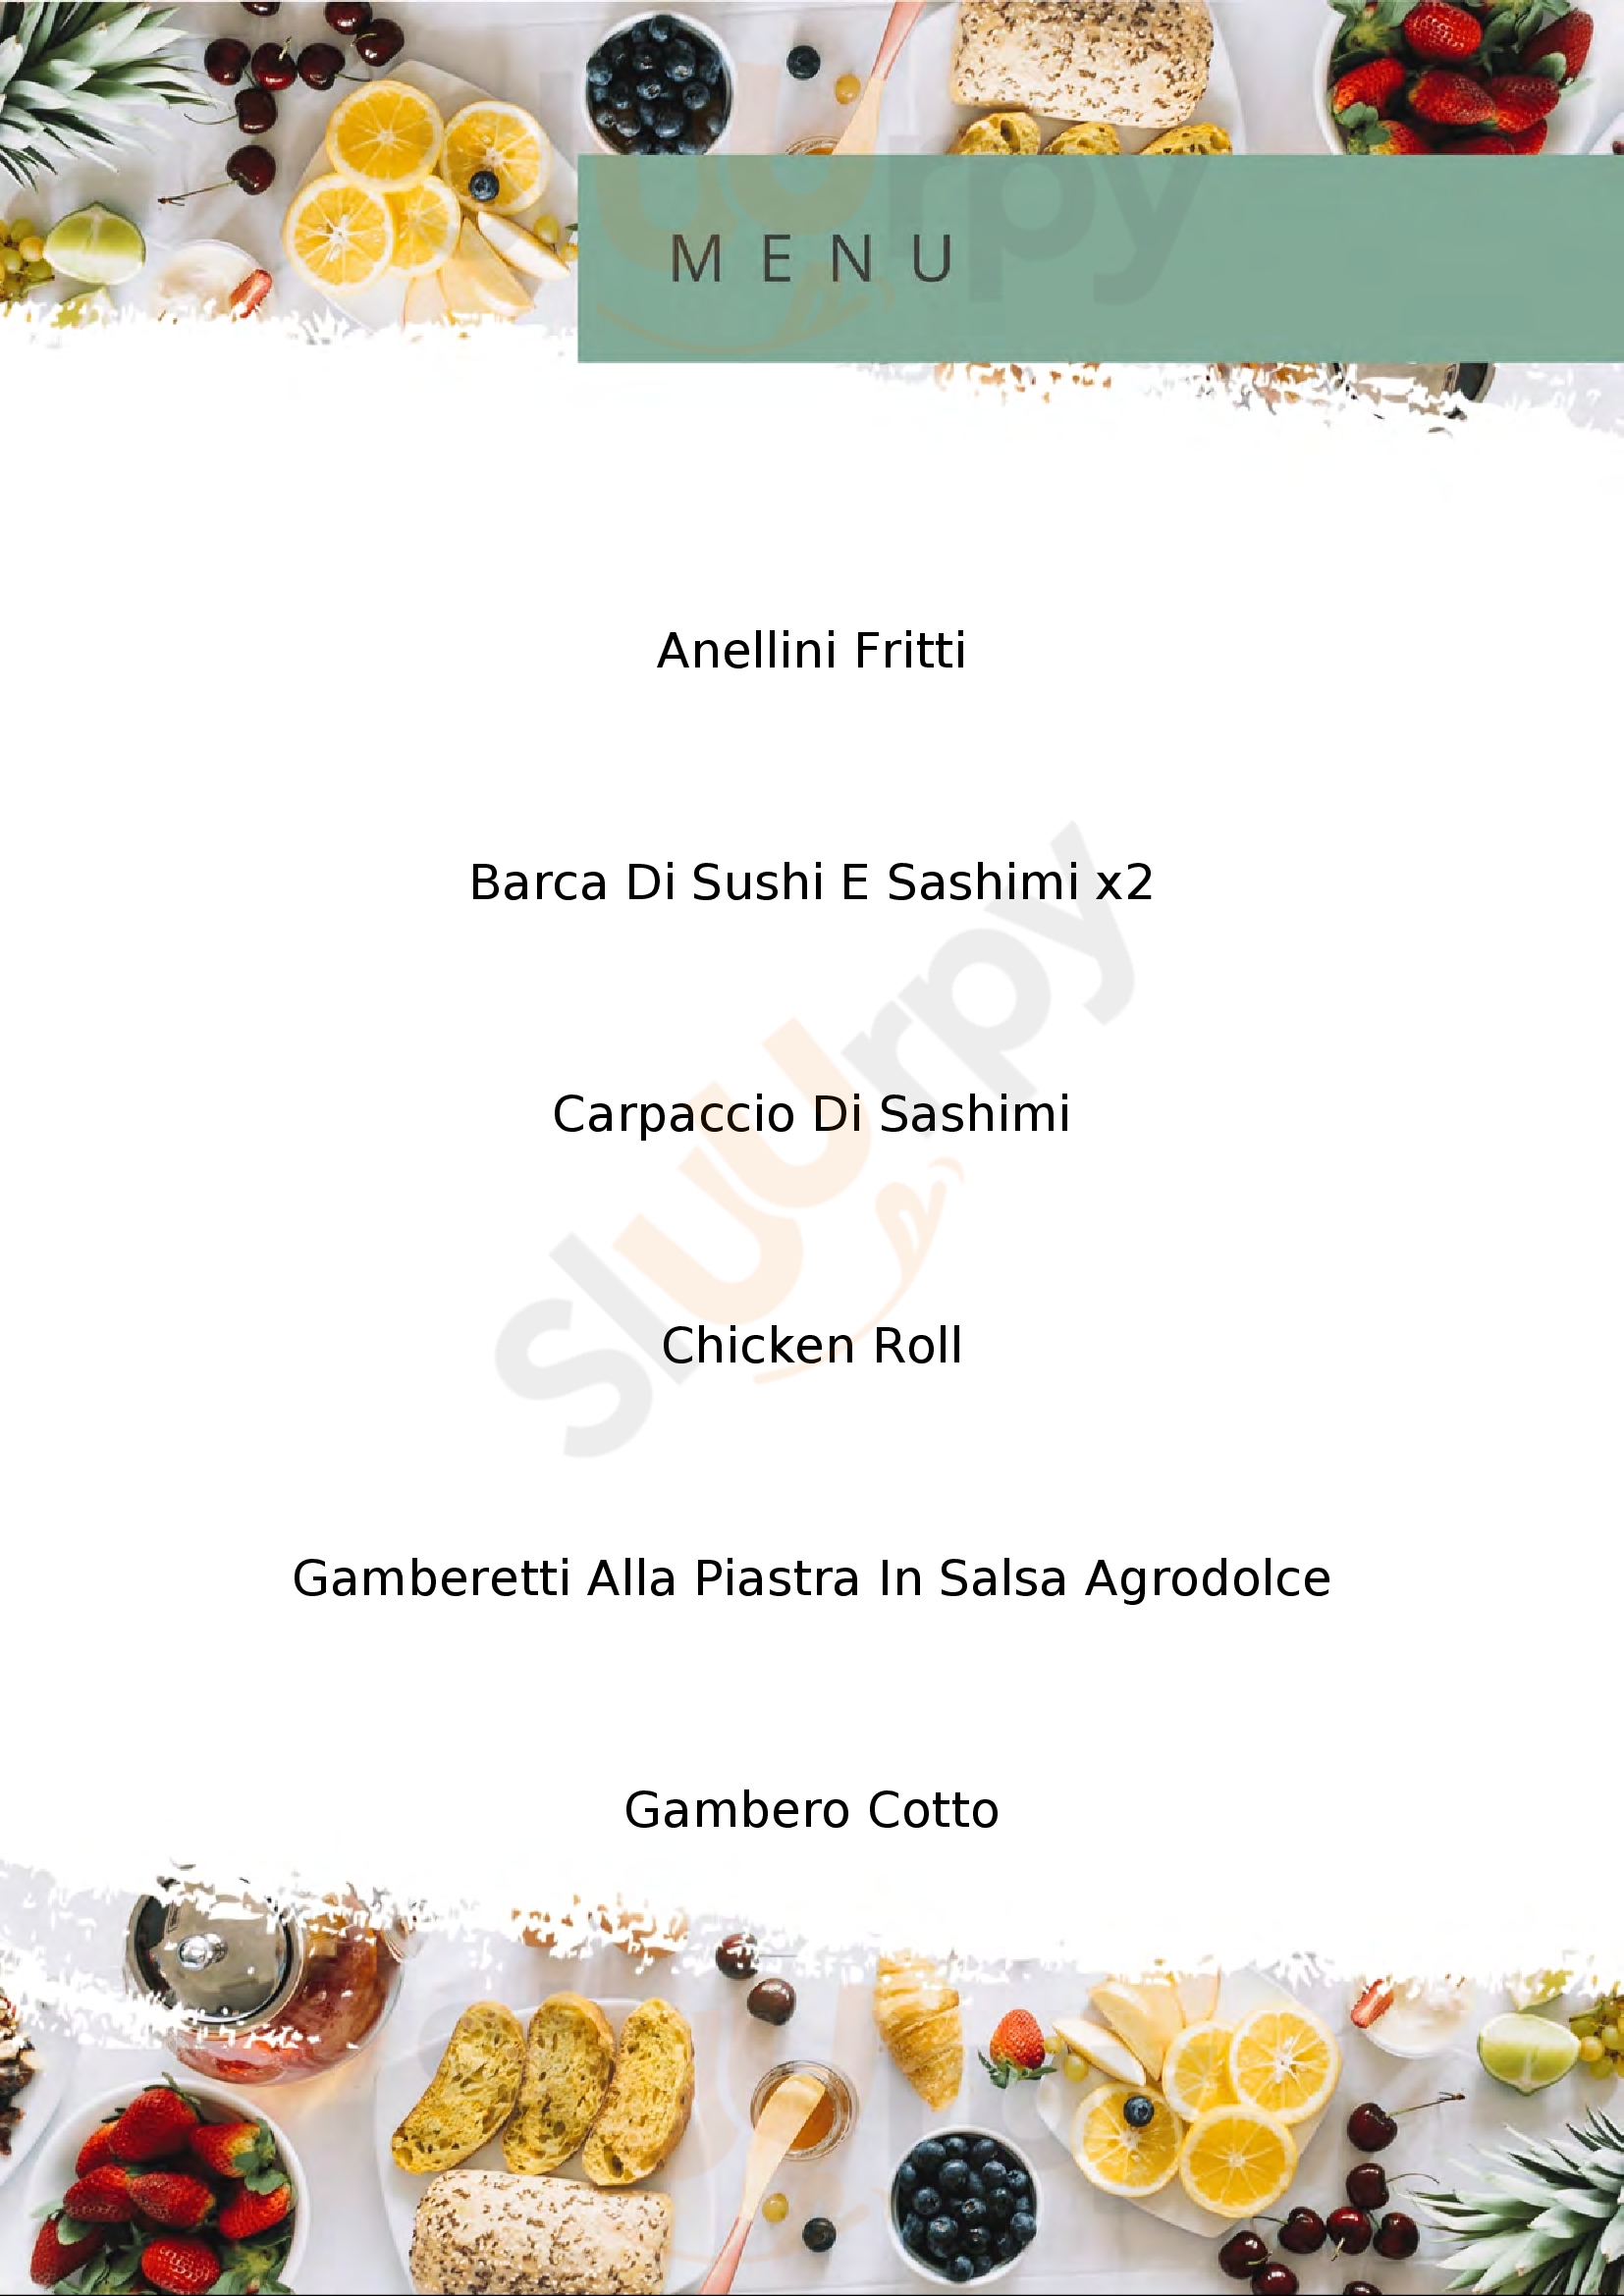 Mix Restaurant Cologno Monzese menù 1 pagina